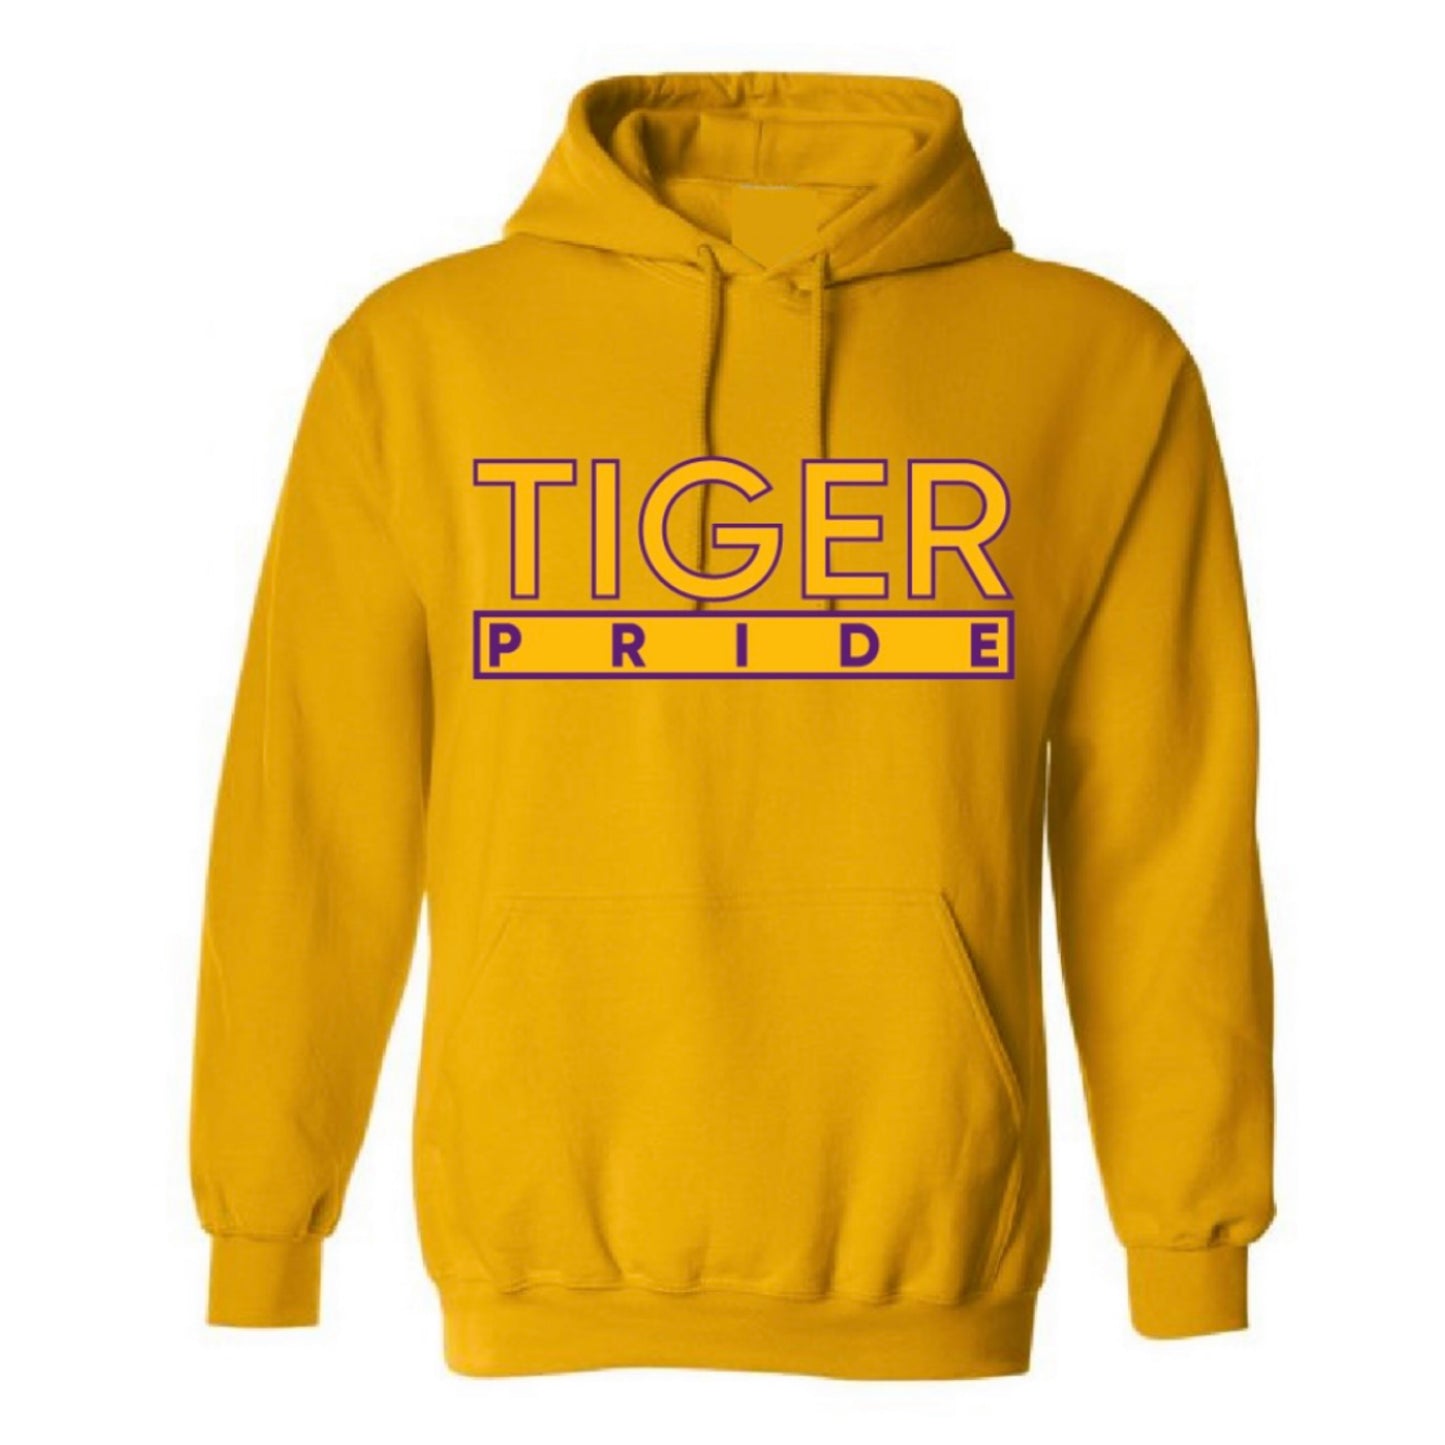 The “Tiger Pride” Hoodie in Gold/Purple (SC)